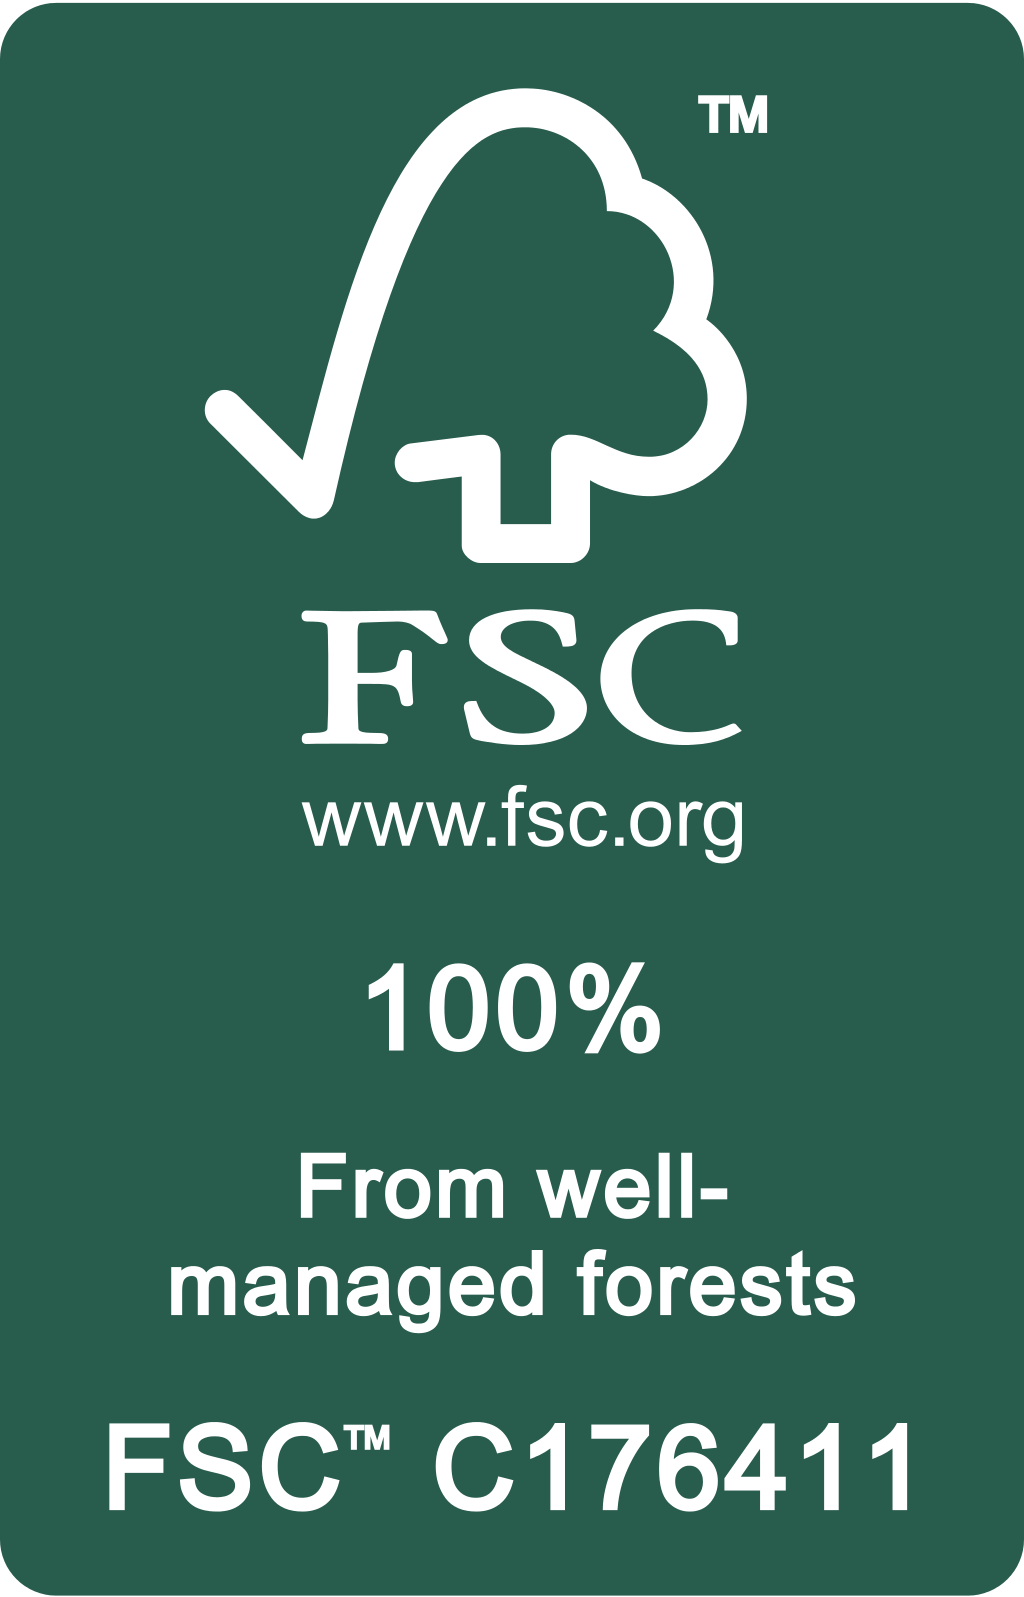 FSC Logo with Premier Packaging number